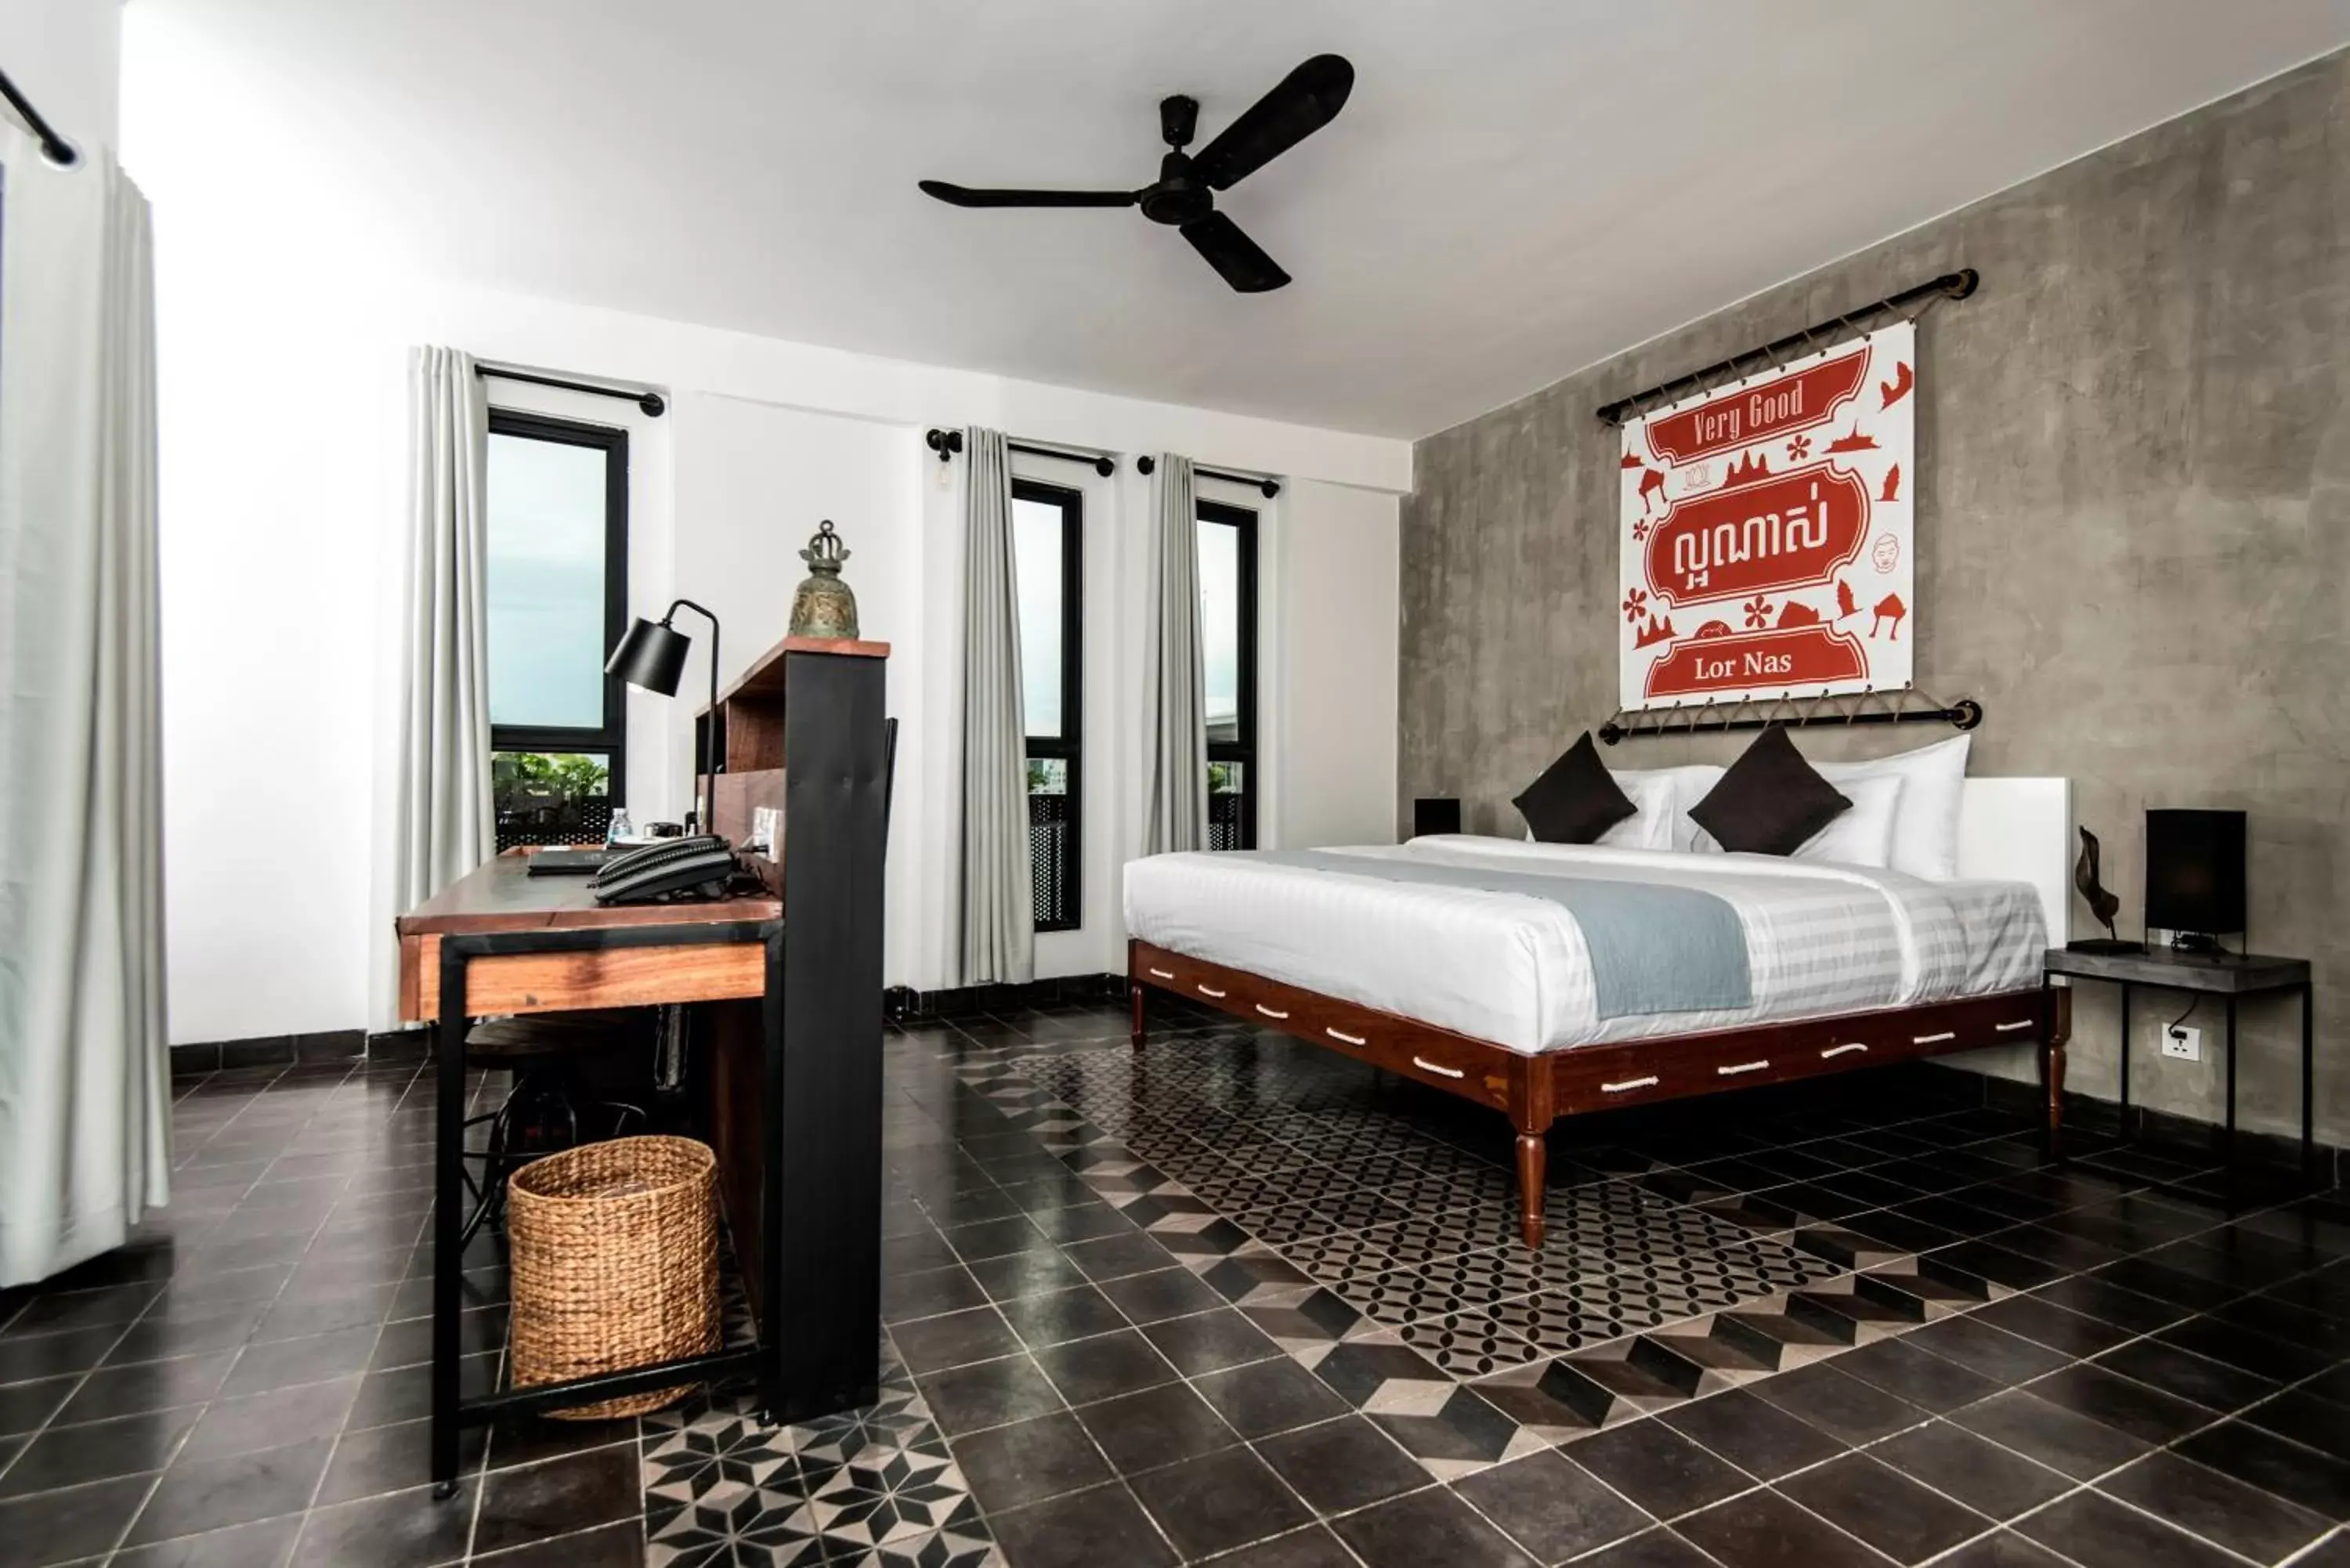 Bed, Room Photo in Aquarius Hotel and Urban Resort